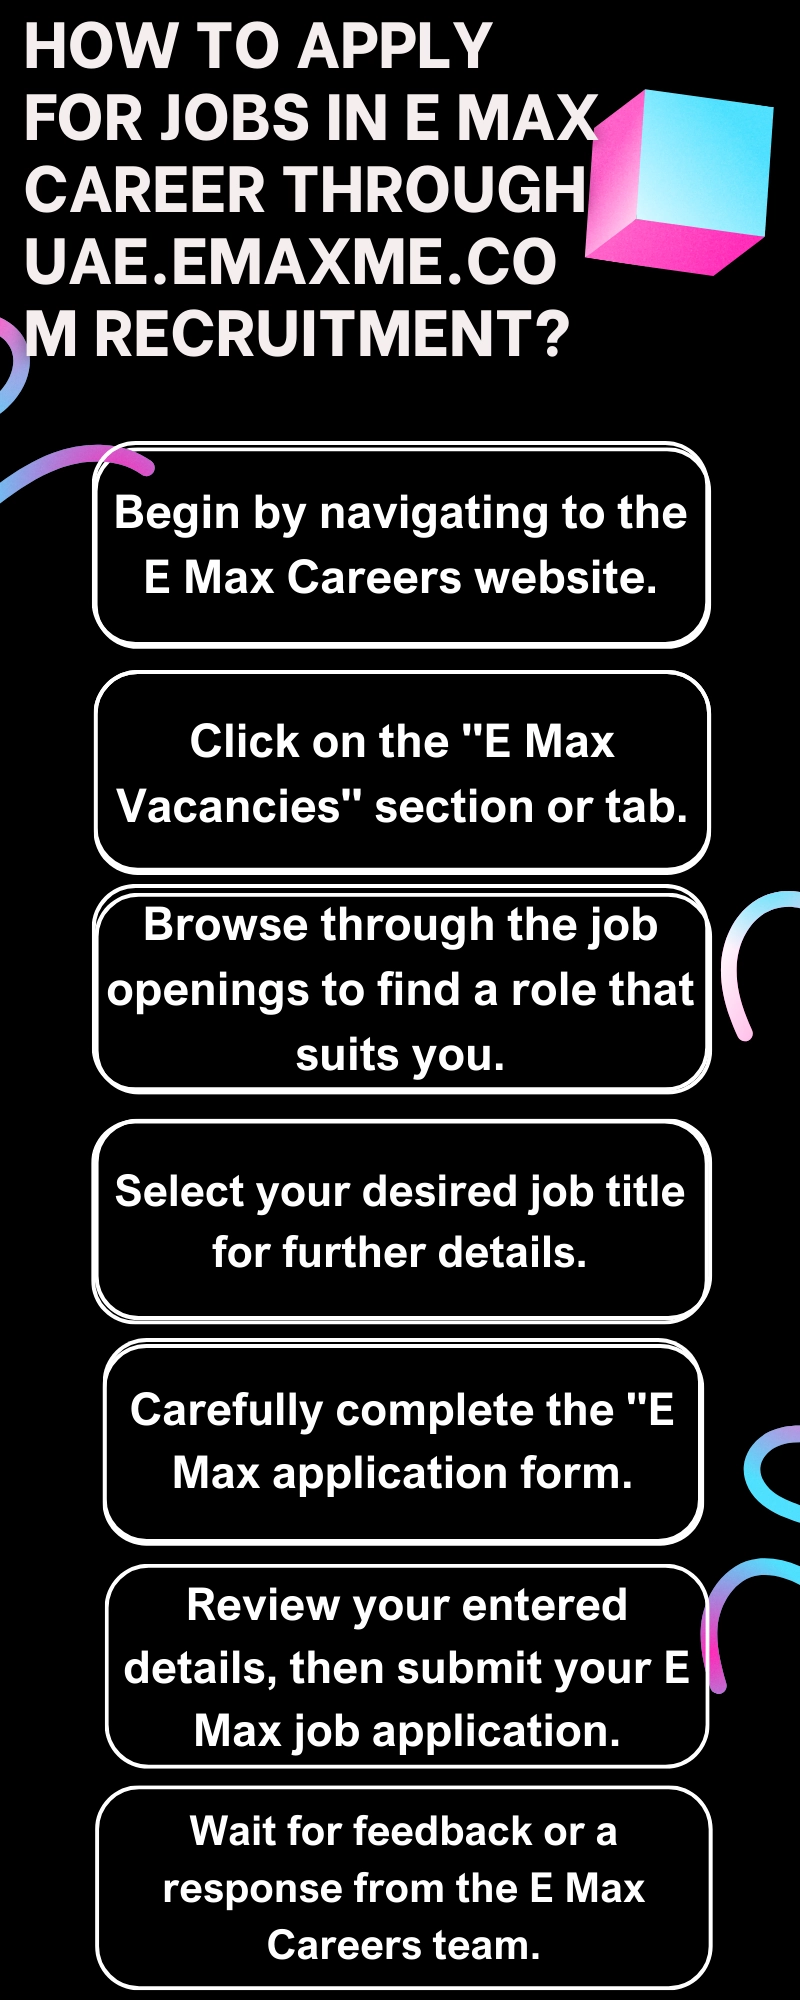 How to Apply for Jobs in E Max Career through uae.emaxme.com recruitment?